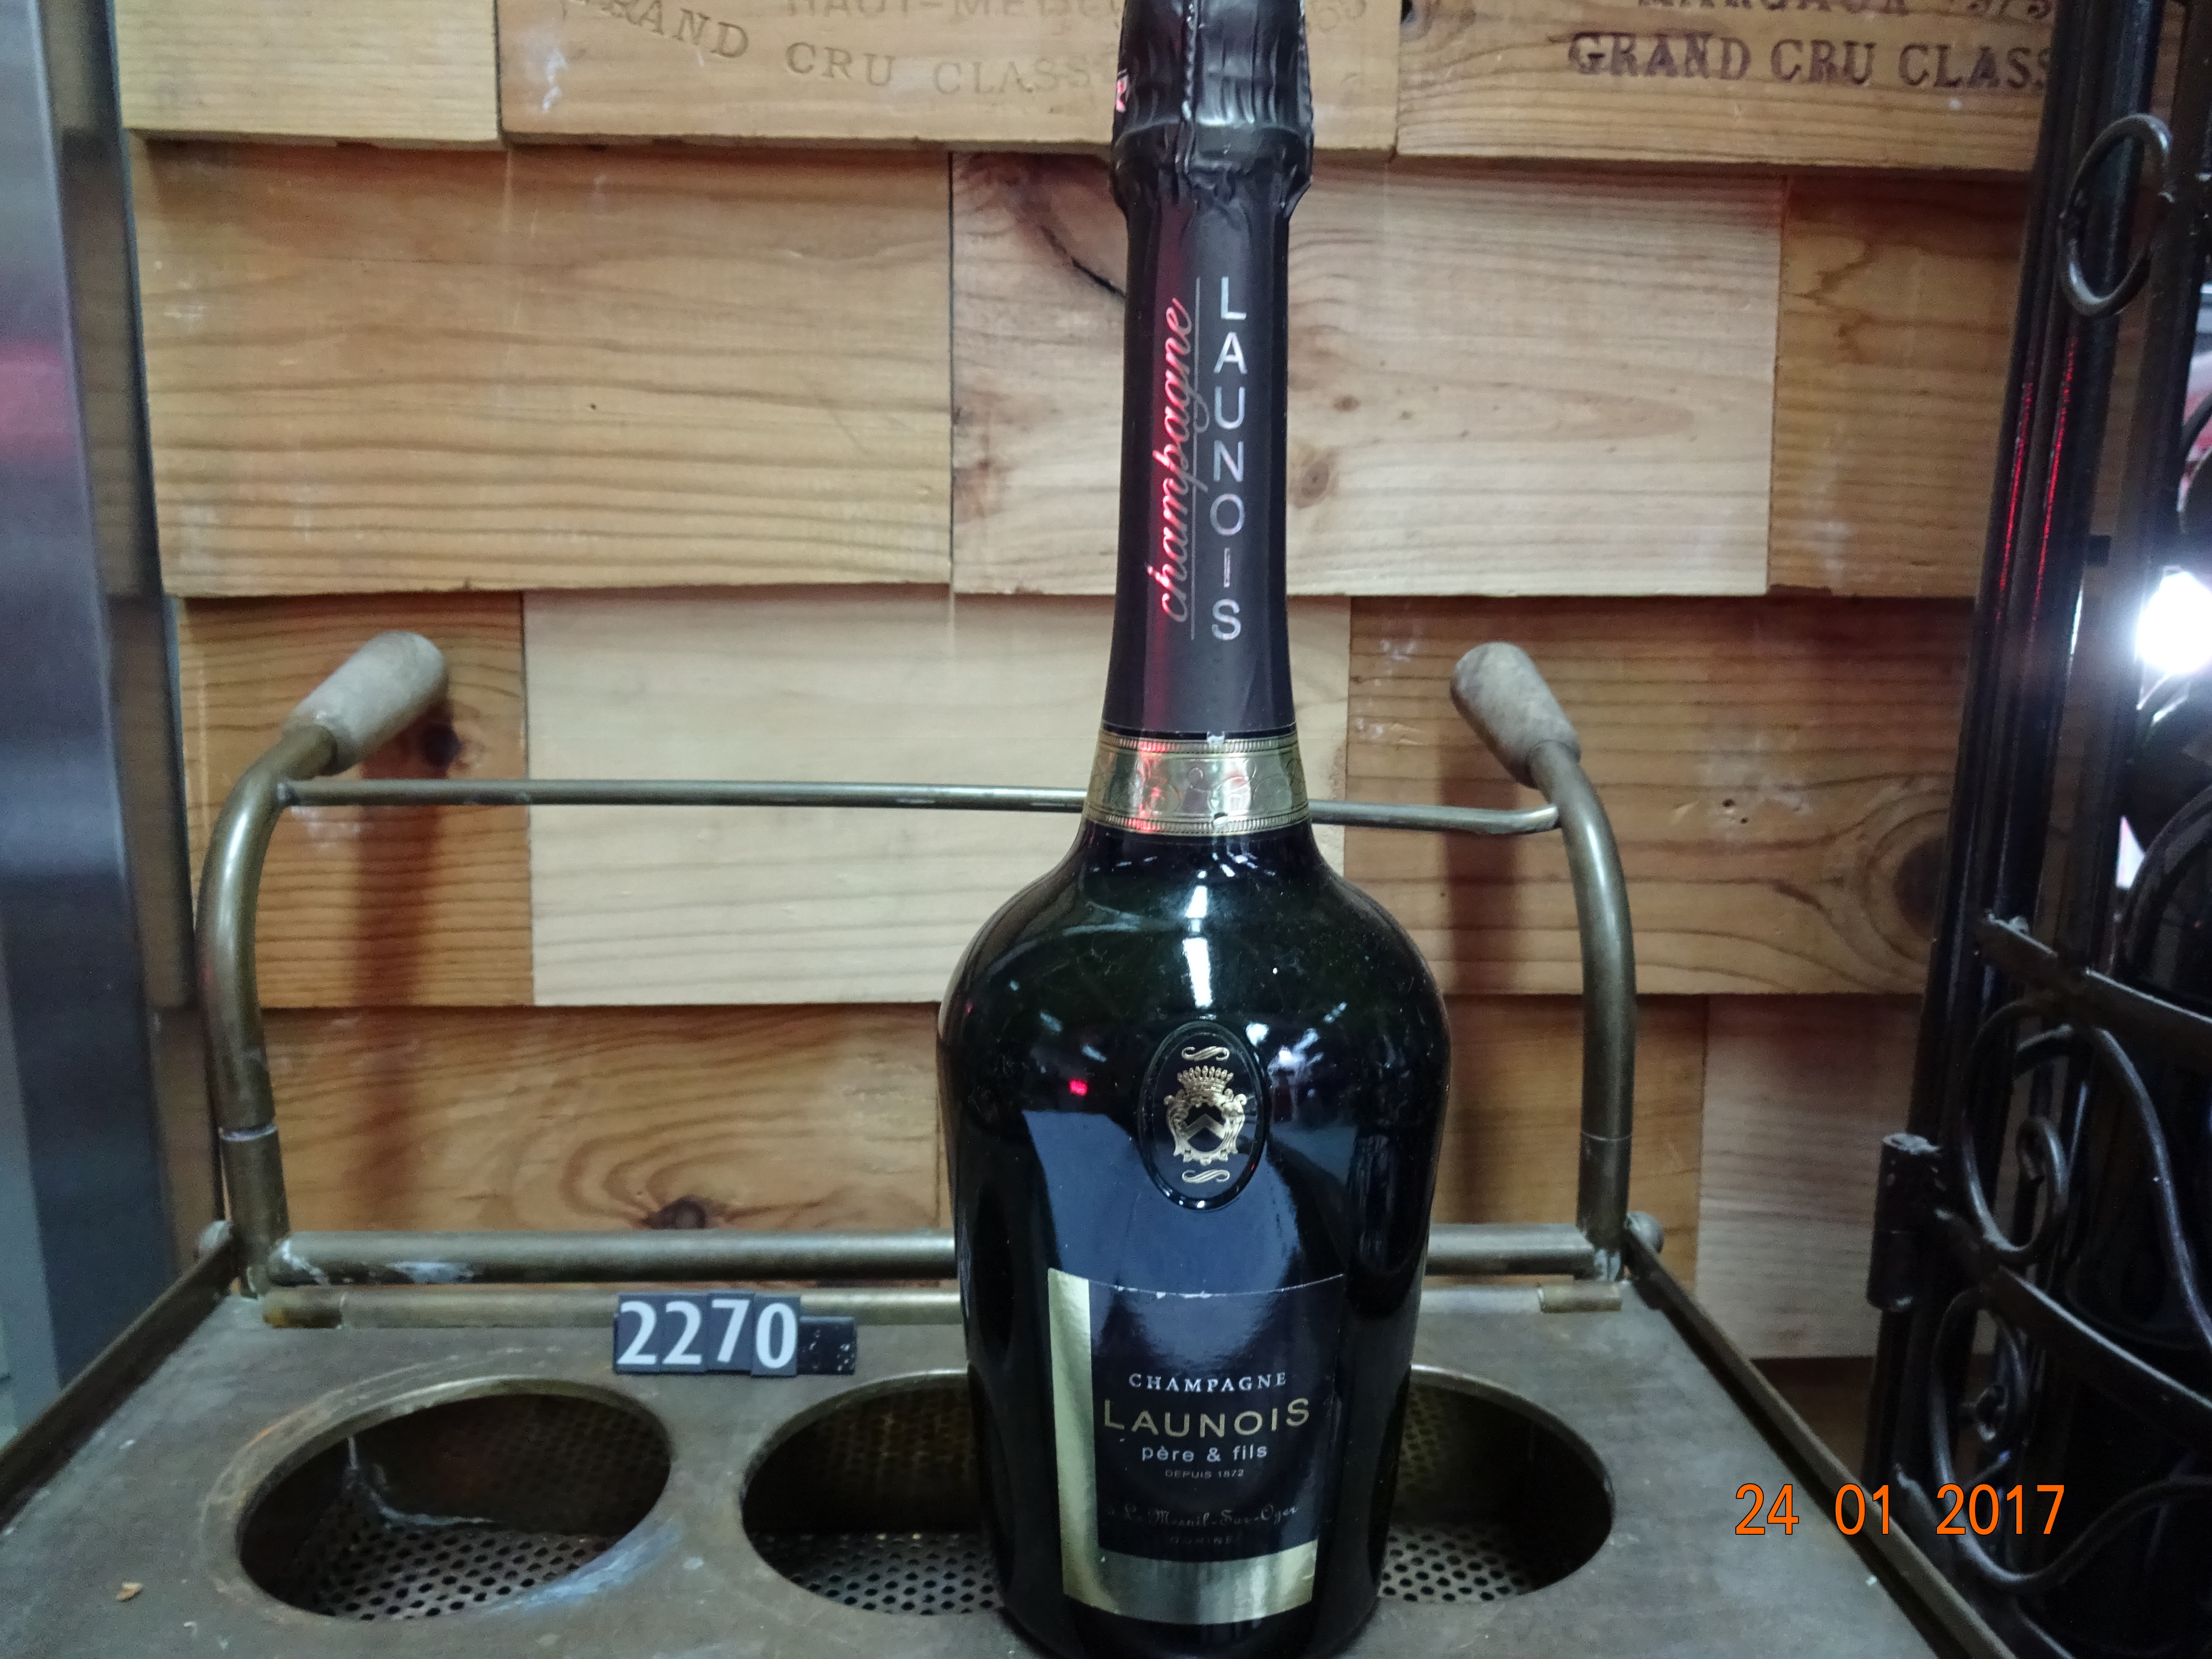 Best ideas about Wine Cellar De Pere
. Save or Pin Champagne Launois pere & fils dorine Sublime Wine Cellar Now.